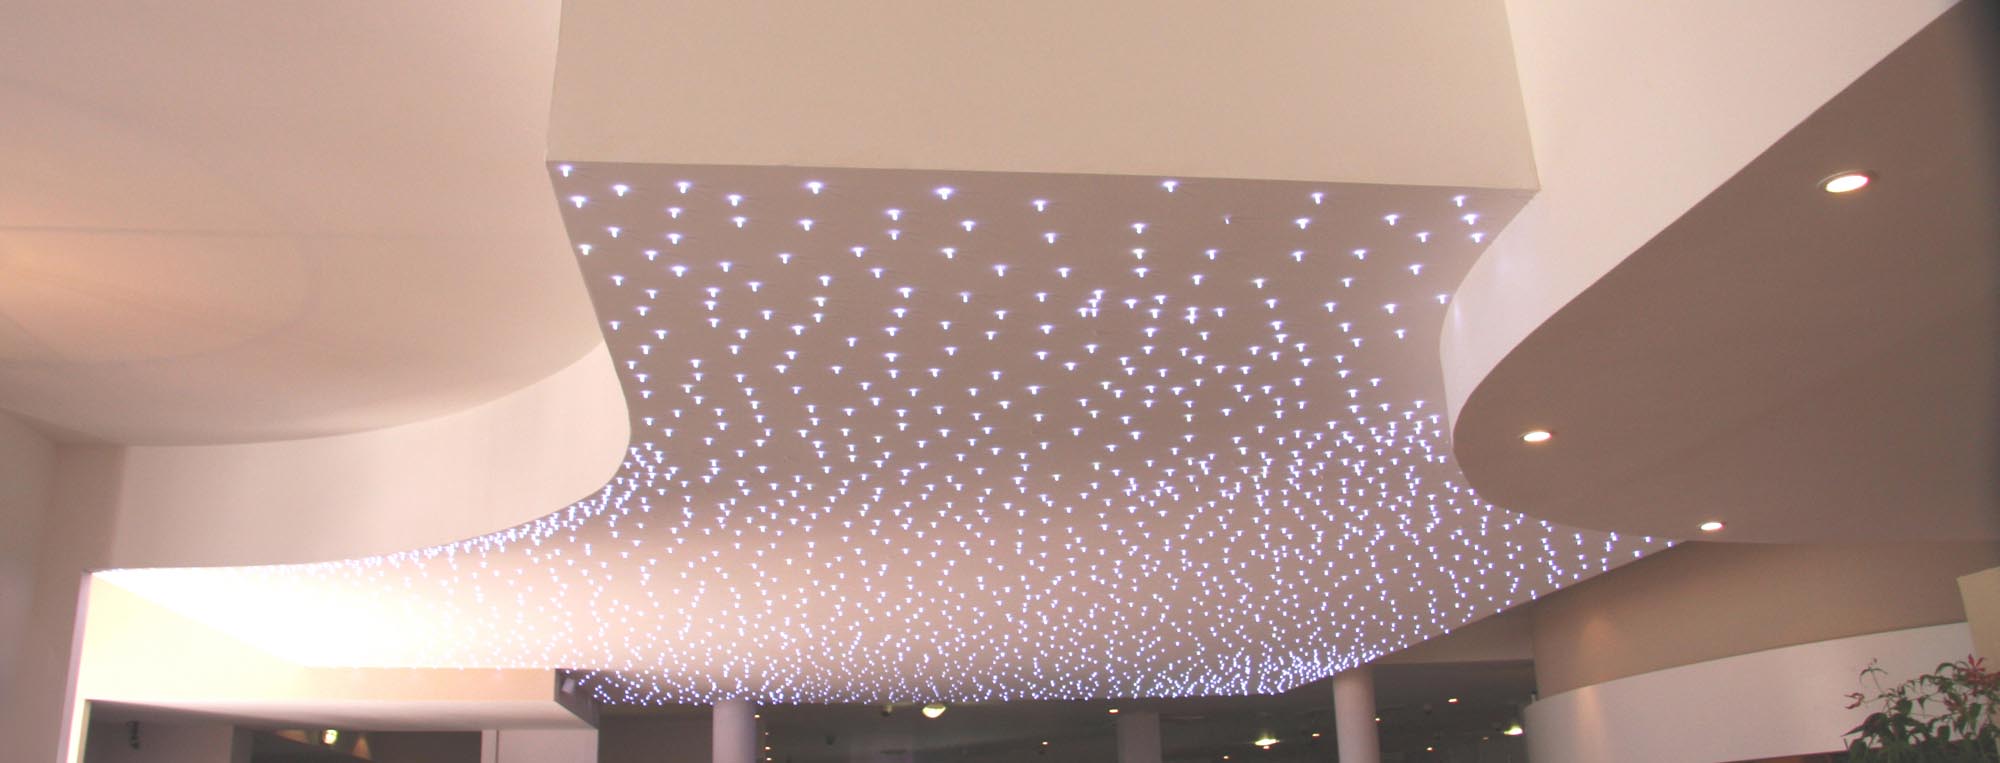 Contemporary ceiling light - PLAFOND ÉTOILÉ - Semeur d'étoiles - glass / LED  / home